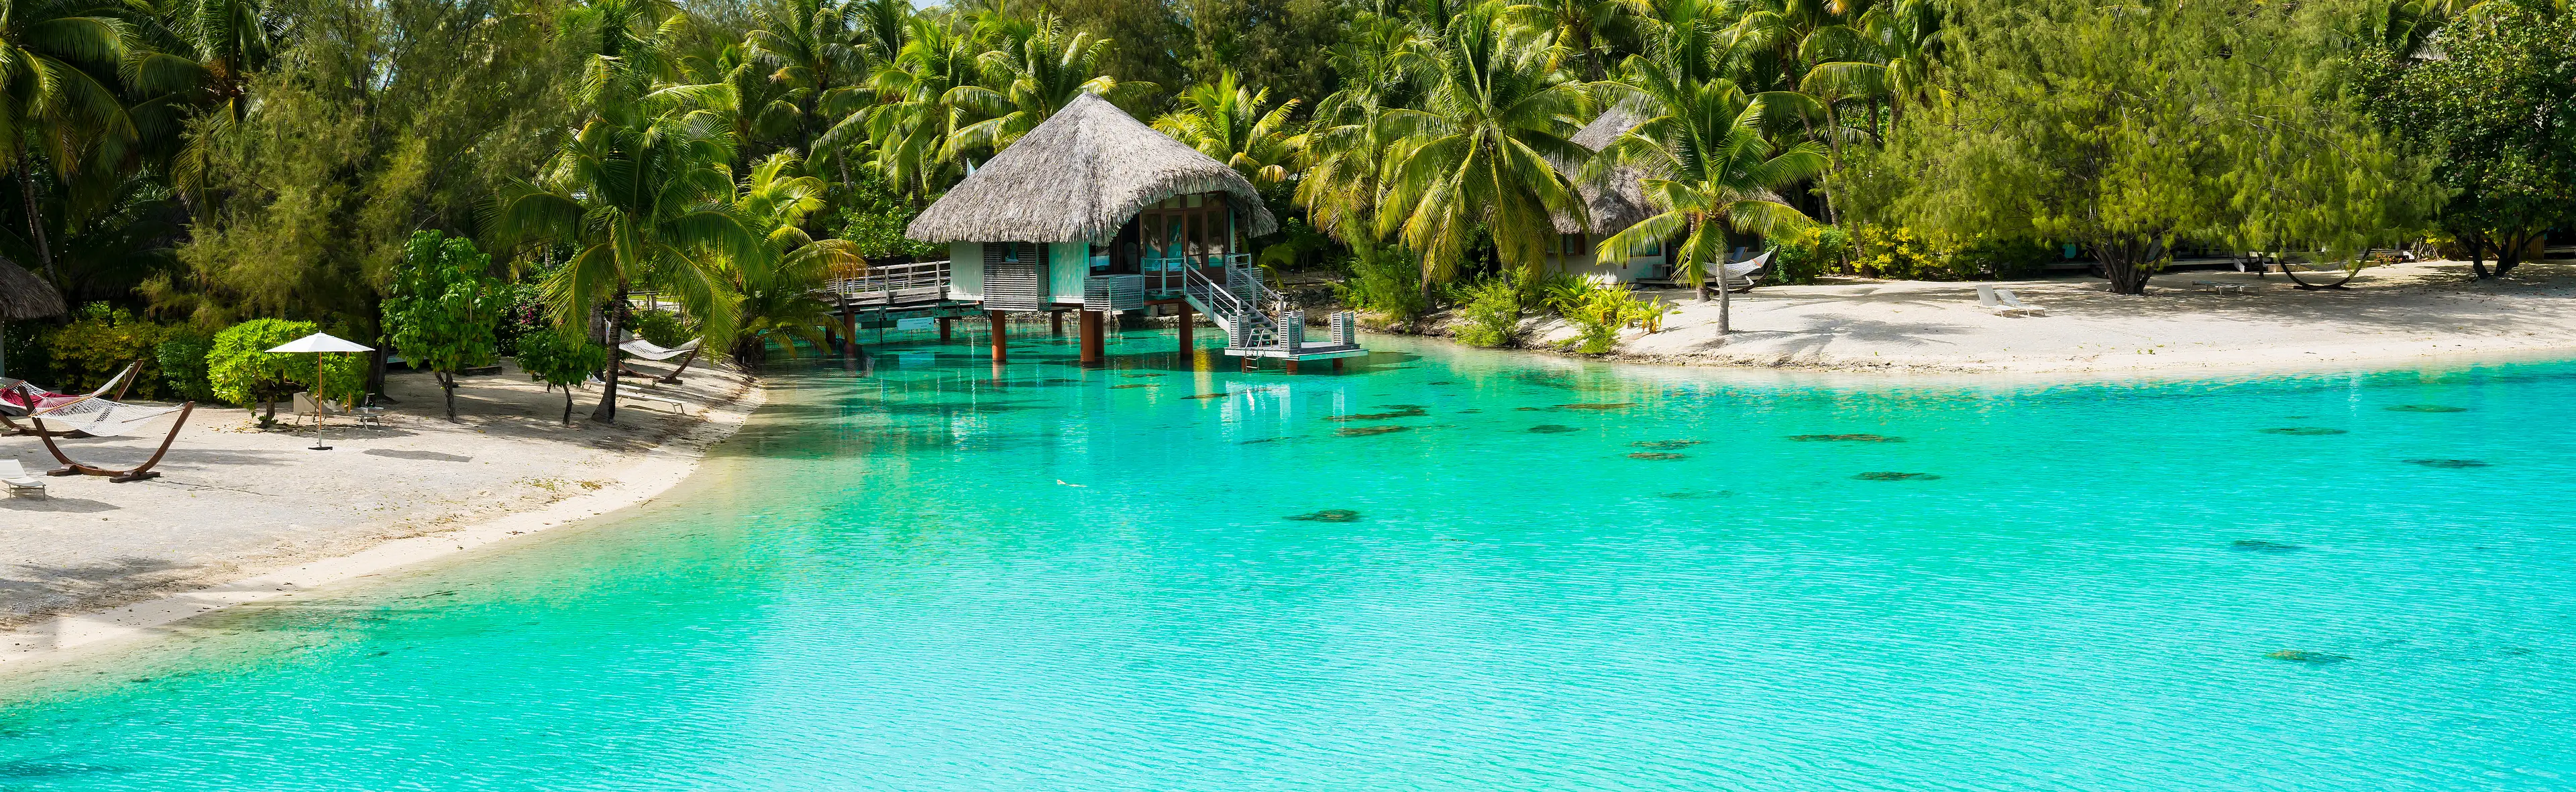 3-Day Exquisite Escape to Bora Bora, French Polynesia